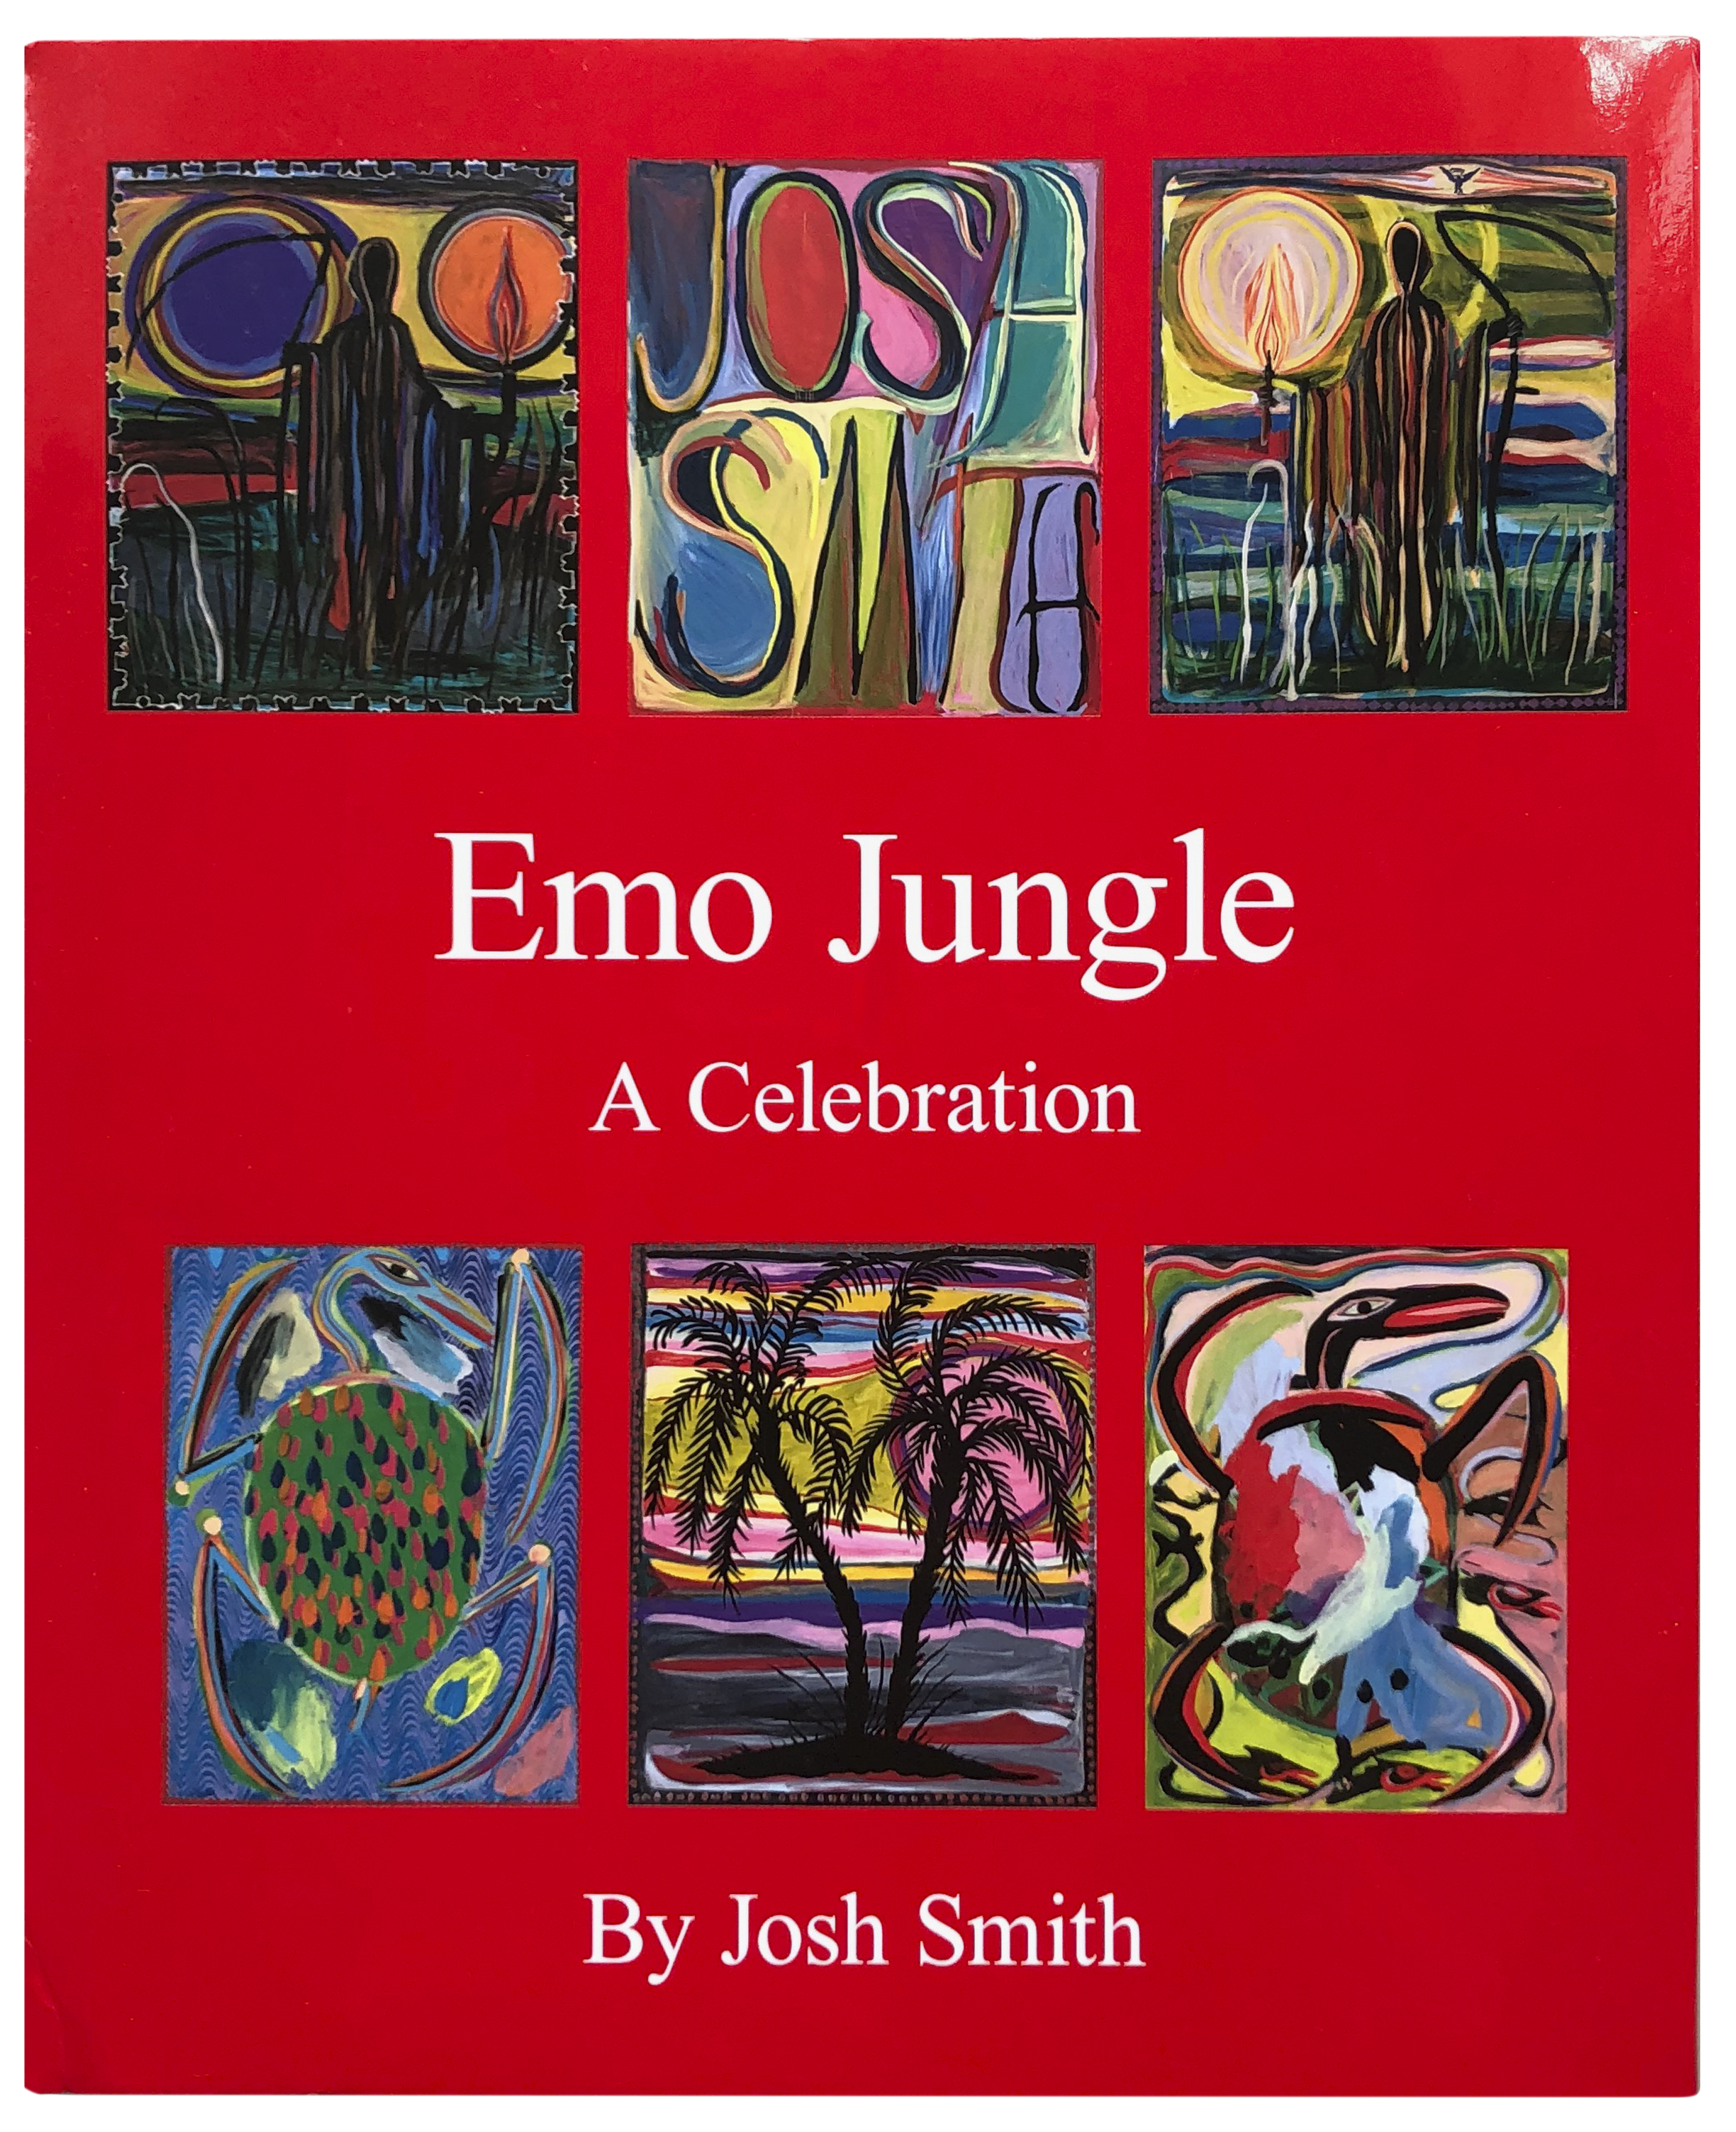 Josh Smith: Emo Jungle, a Celebration